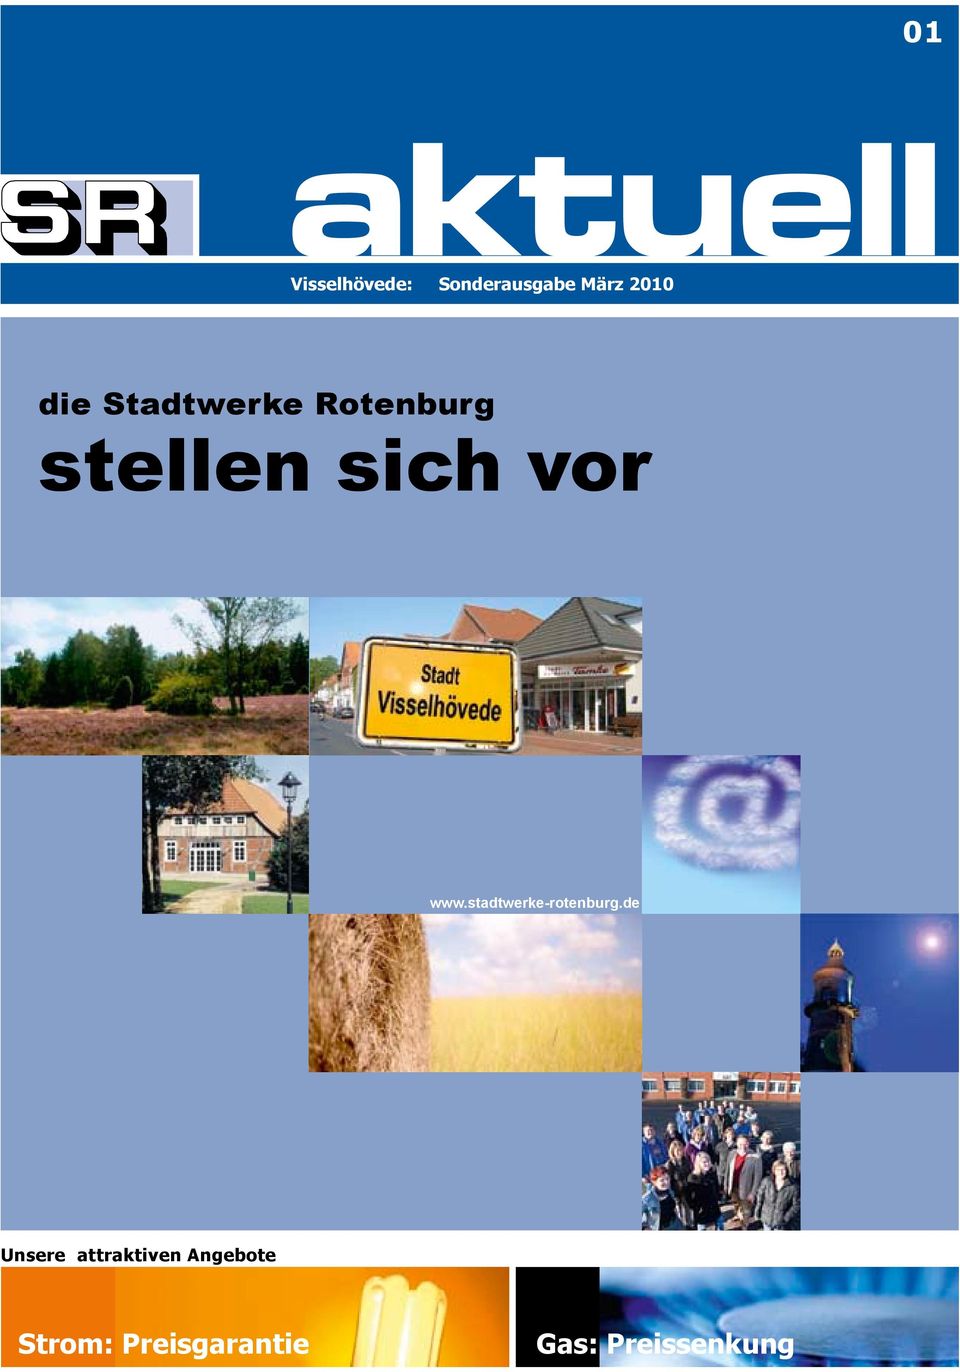 www.stadtwerke-rotenburg.